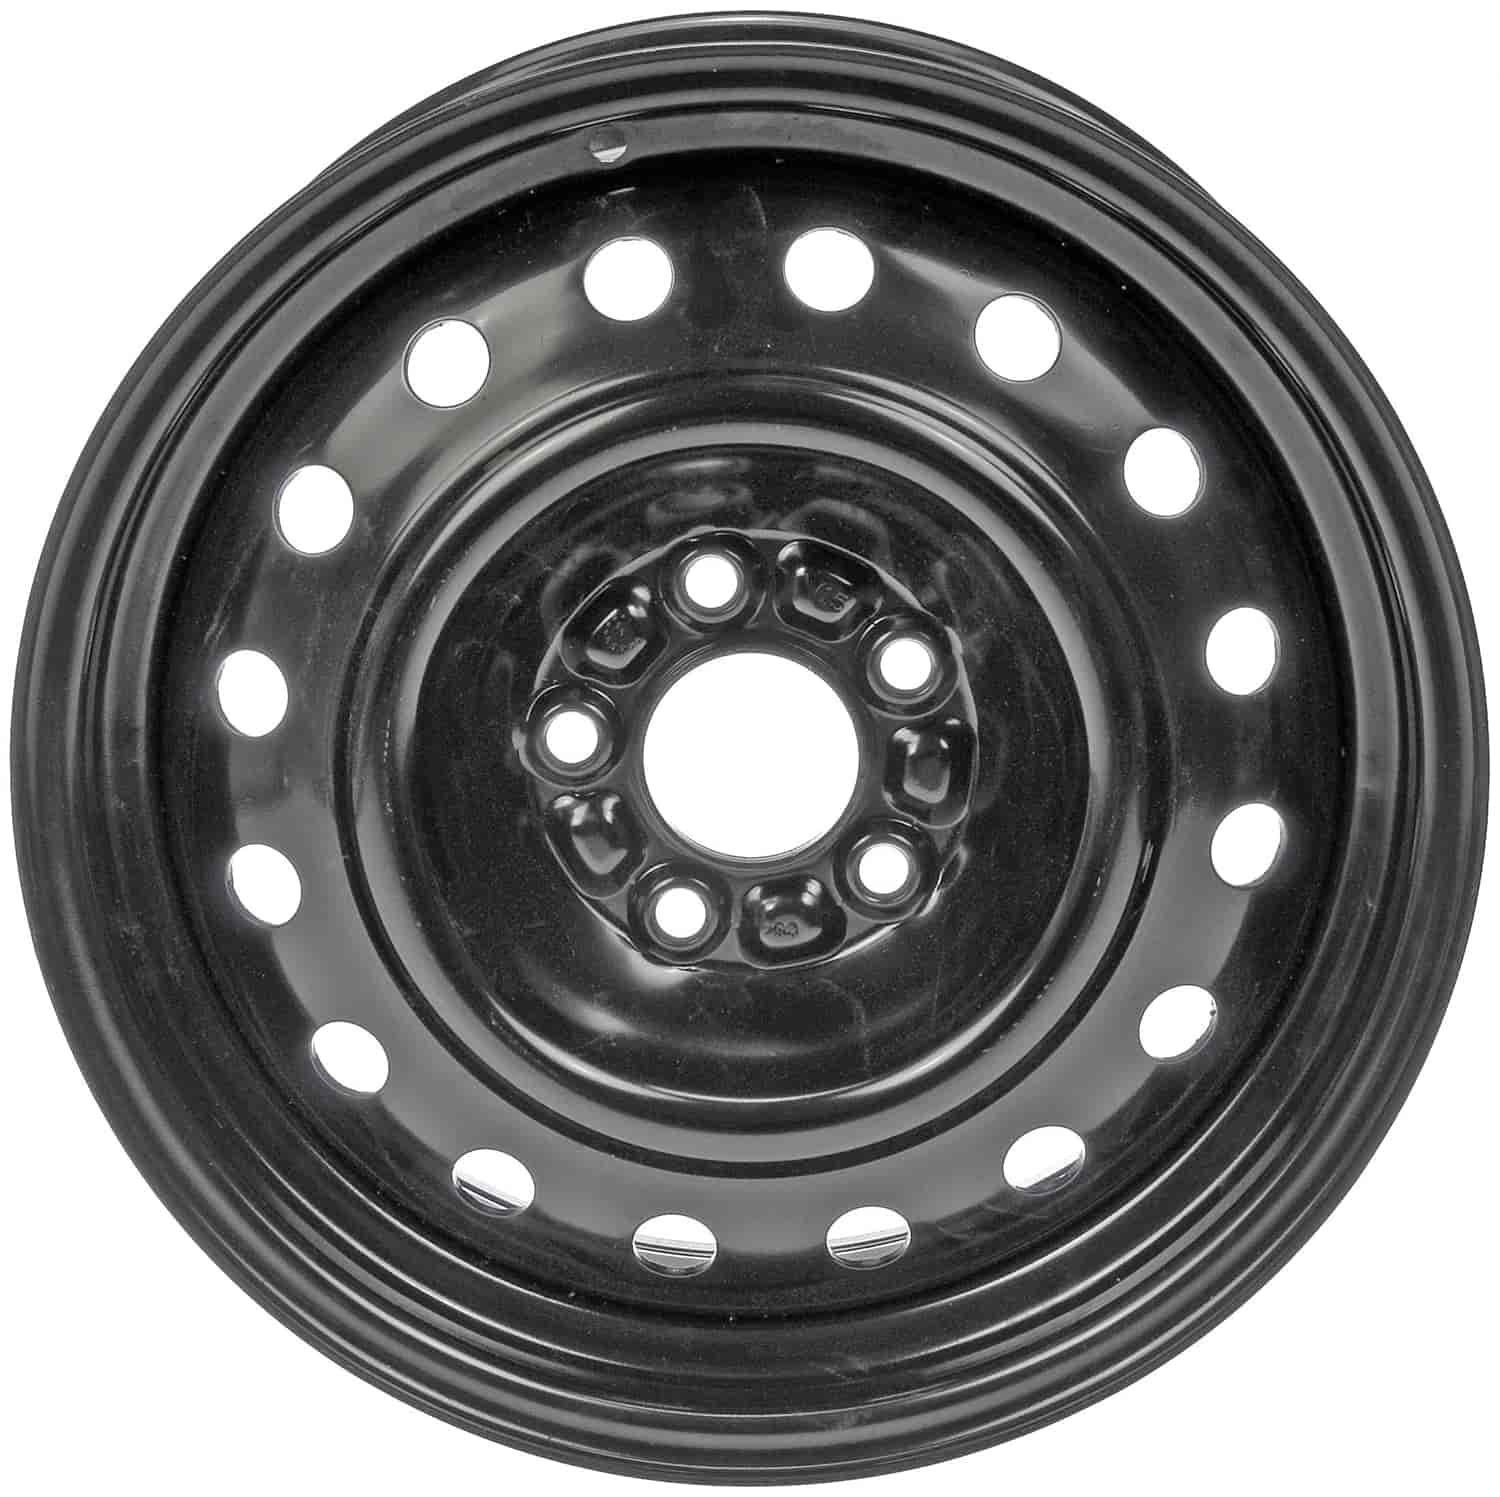 939-159 Steel Wheel Fits 2004-2008 Chevy HHR, Malibu  [16 in. x 6.50 in.]